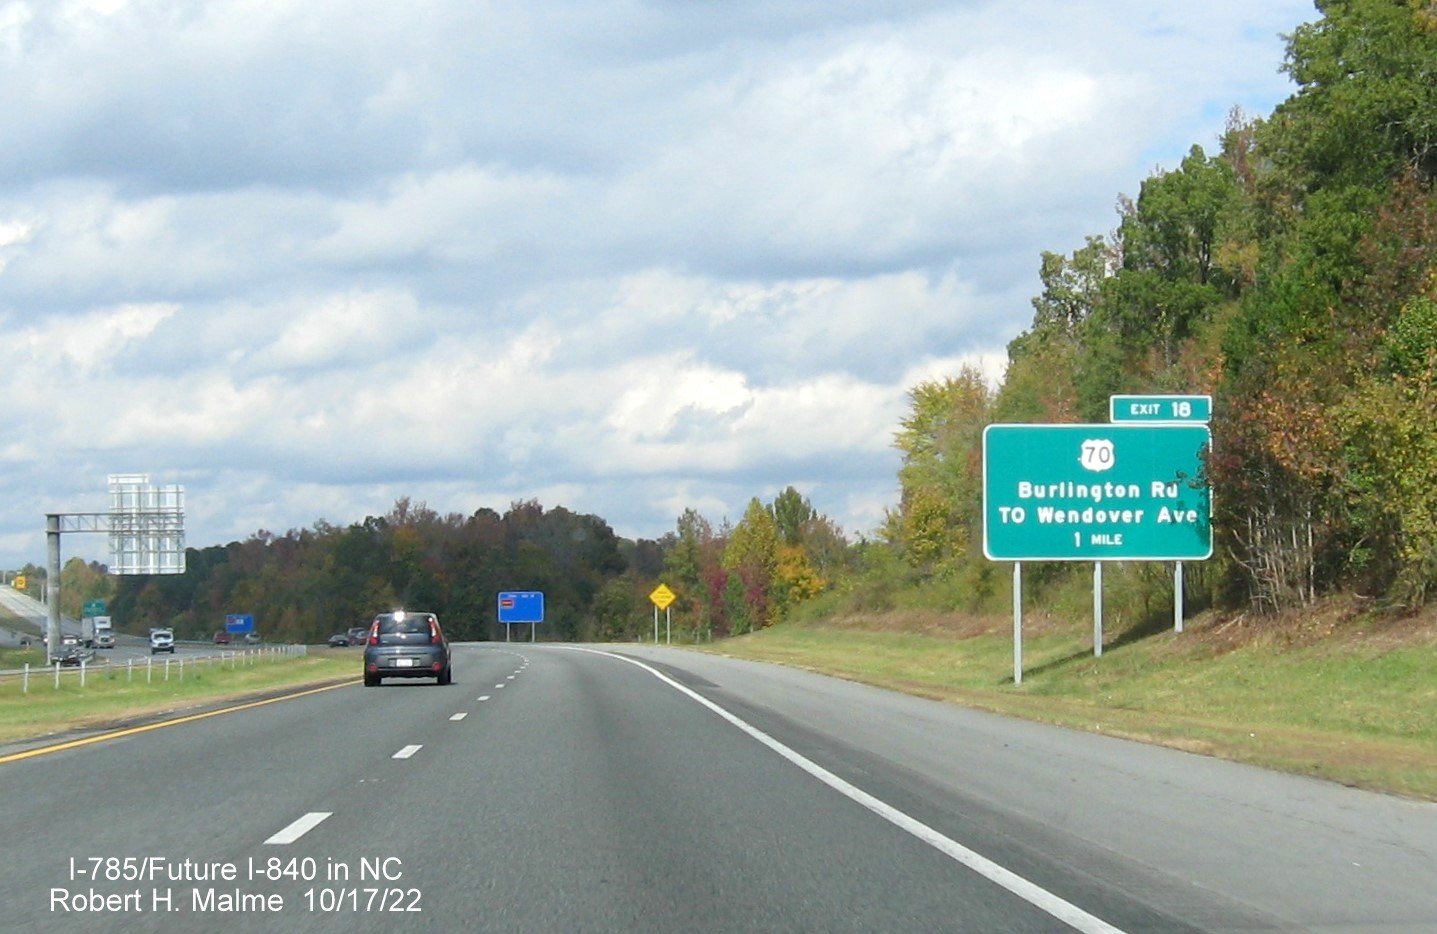 Image of 1 mile advance sign for US 70/Burlington Road exit on I-795 North/Future I-840 West Greensboro 
                  Urban Loop, October 2022